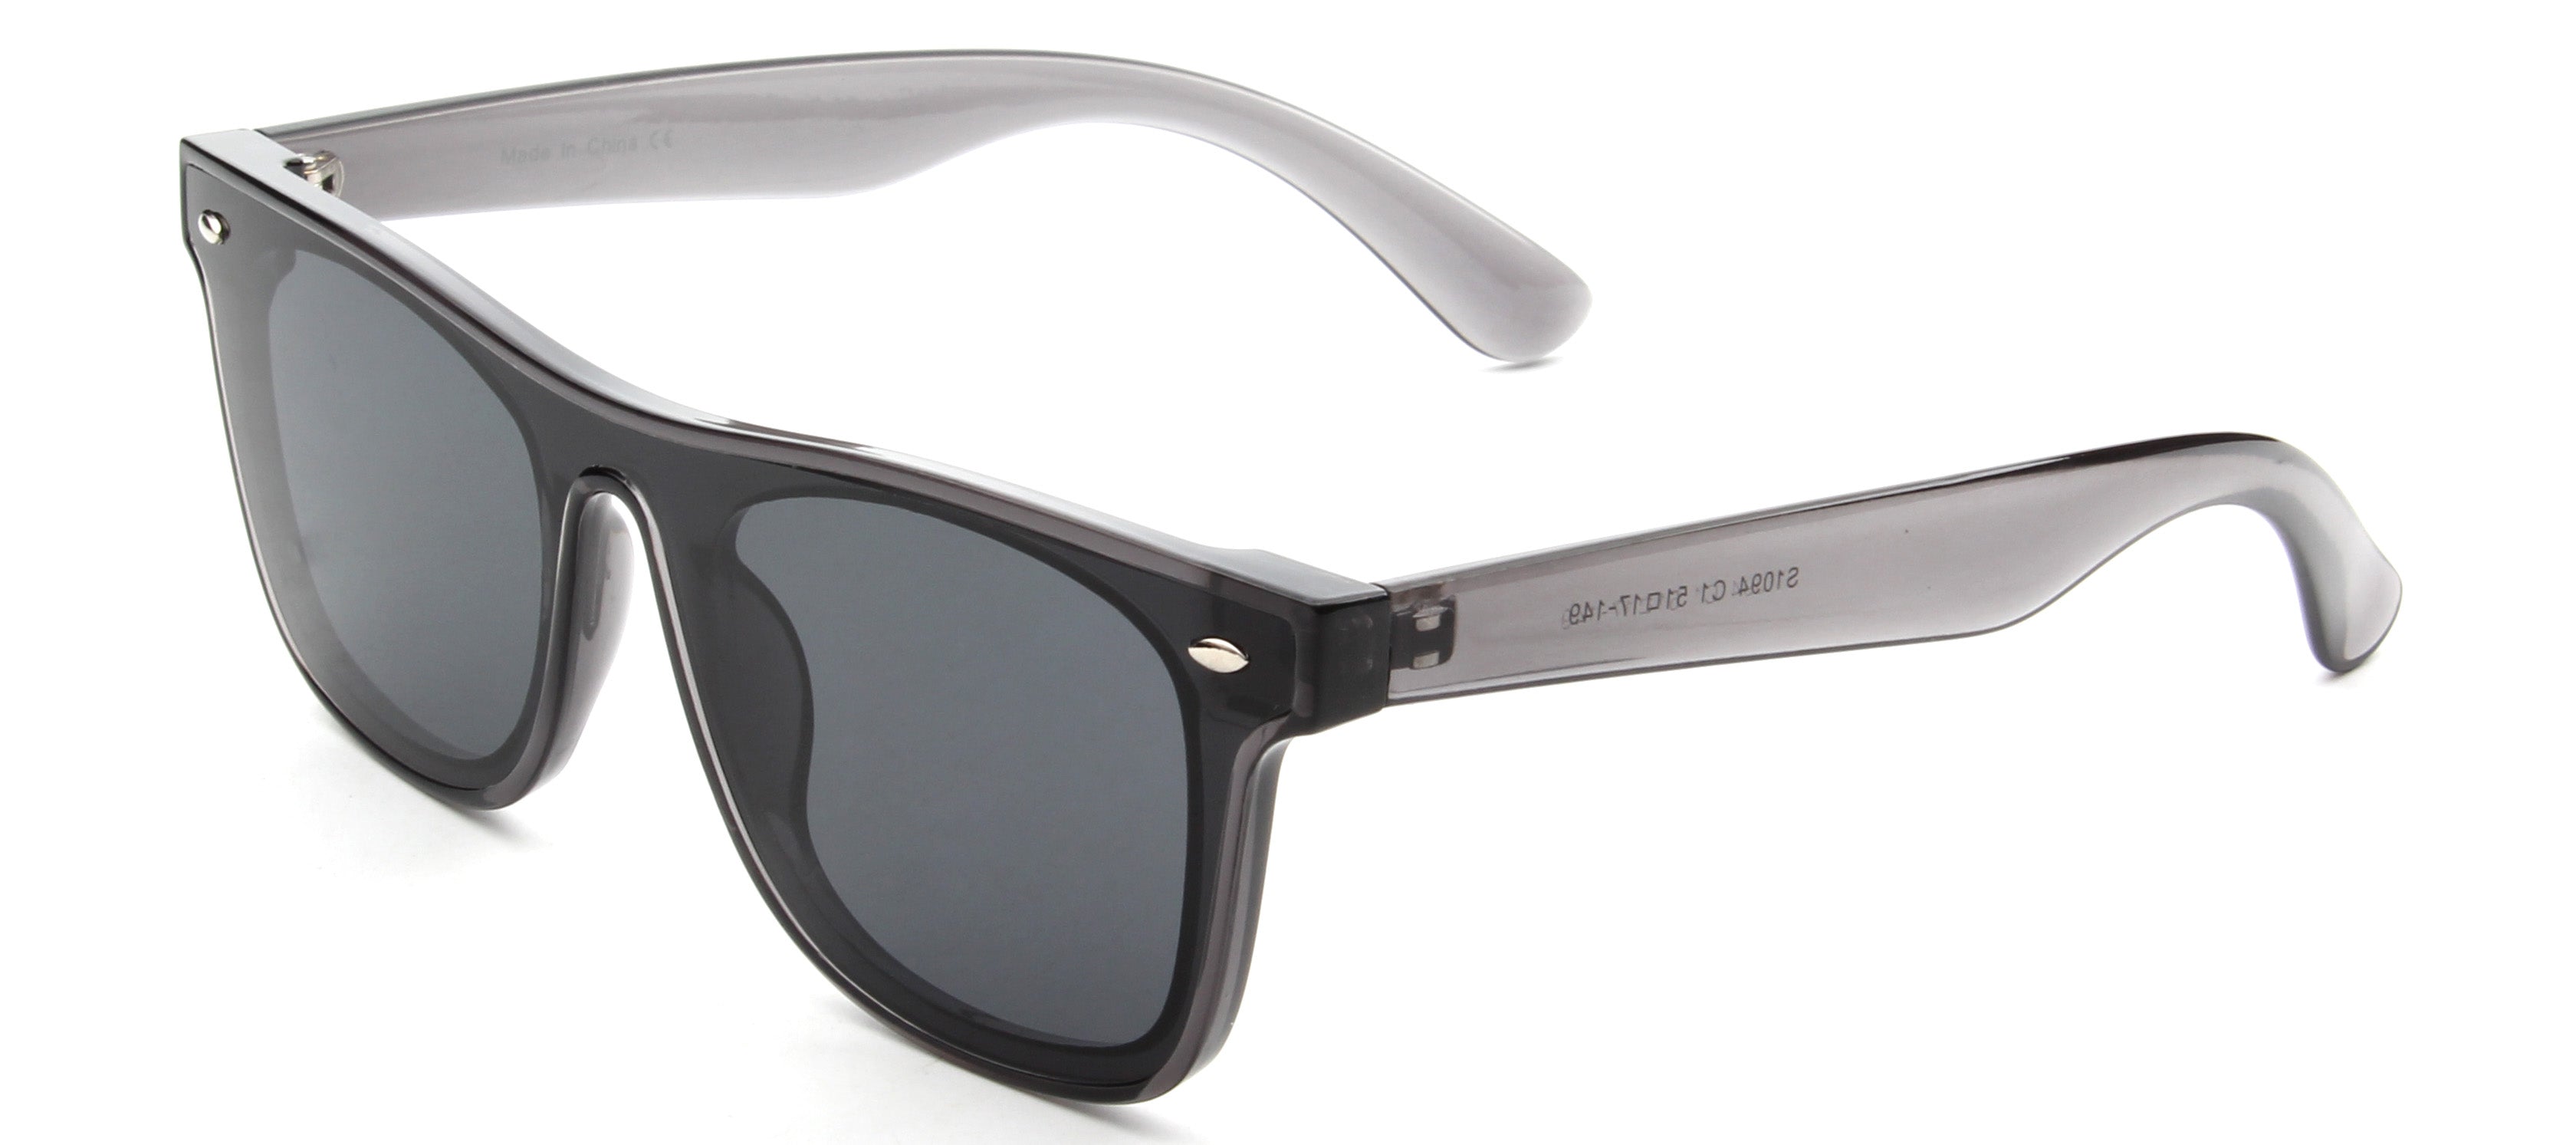 S1094 - Women Square Flat Lens Fashion Sunglasses Grey